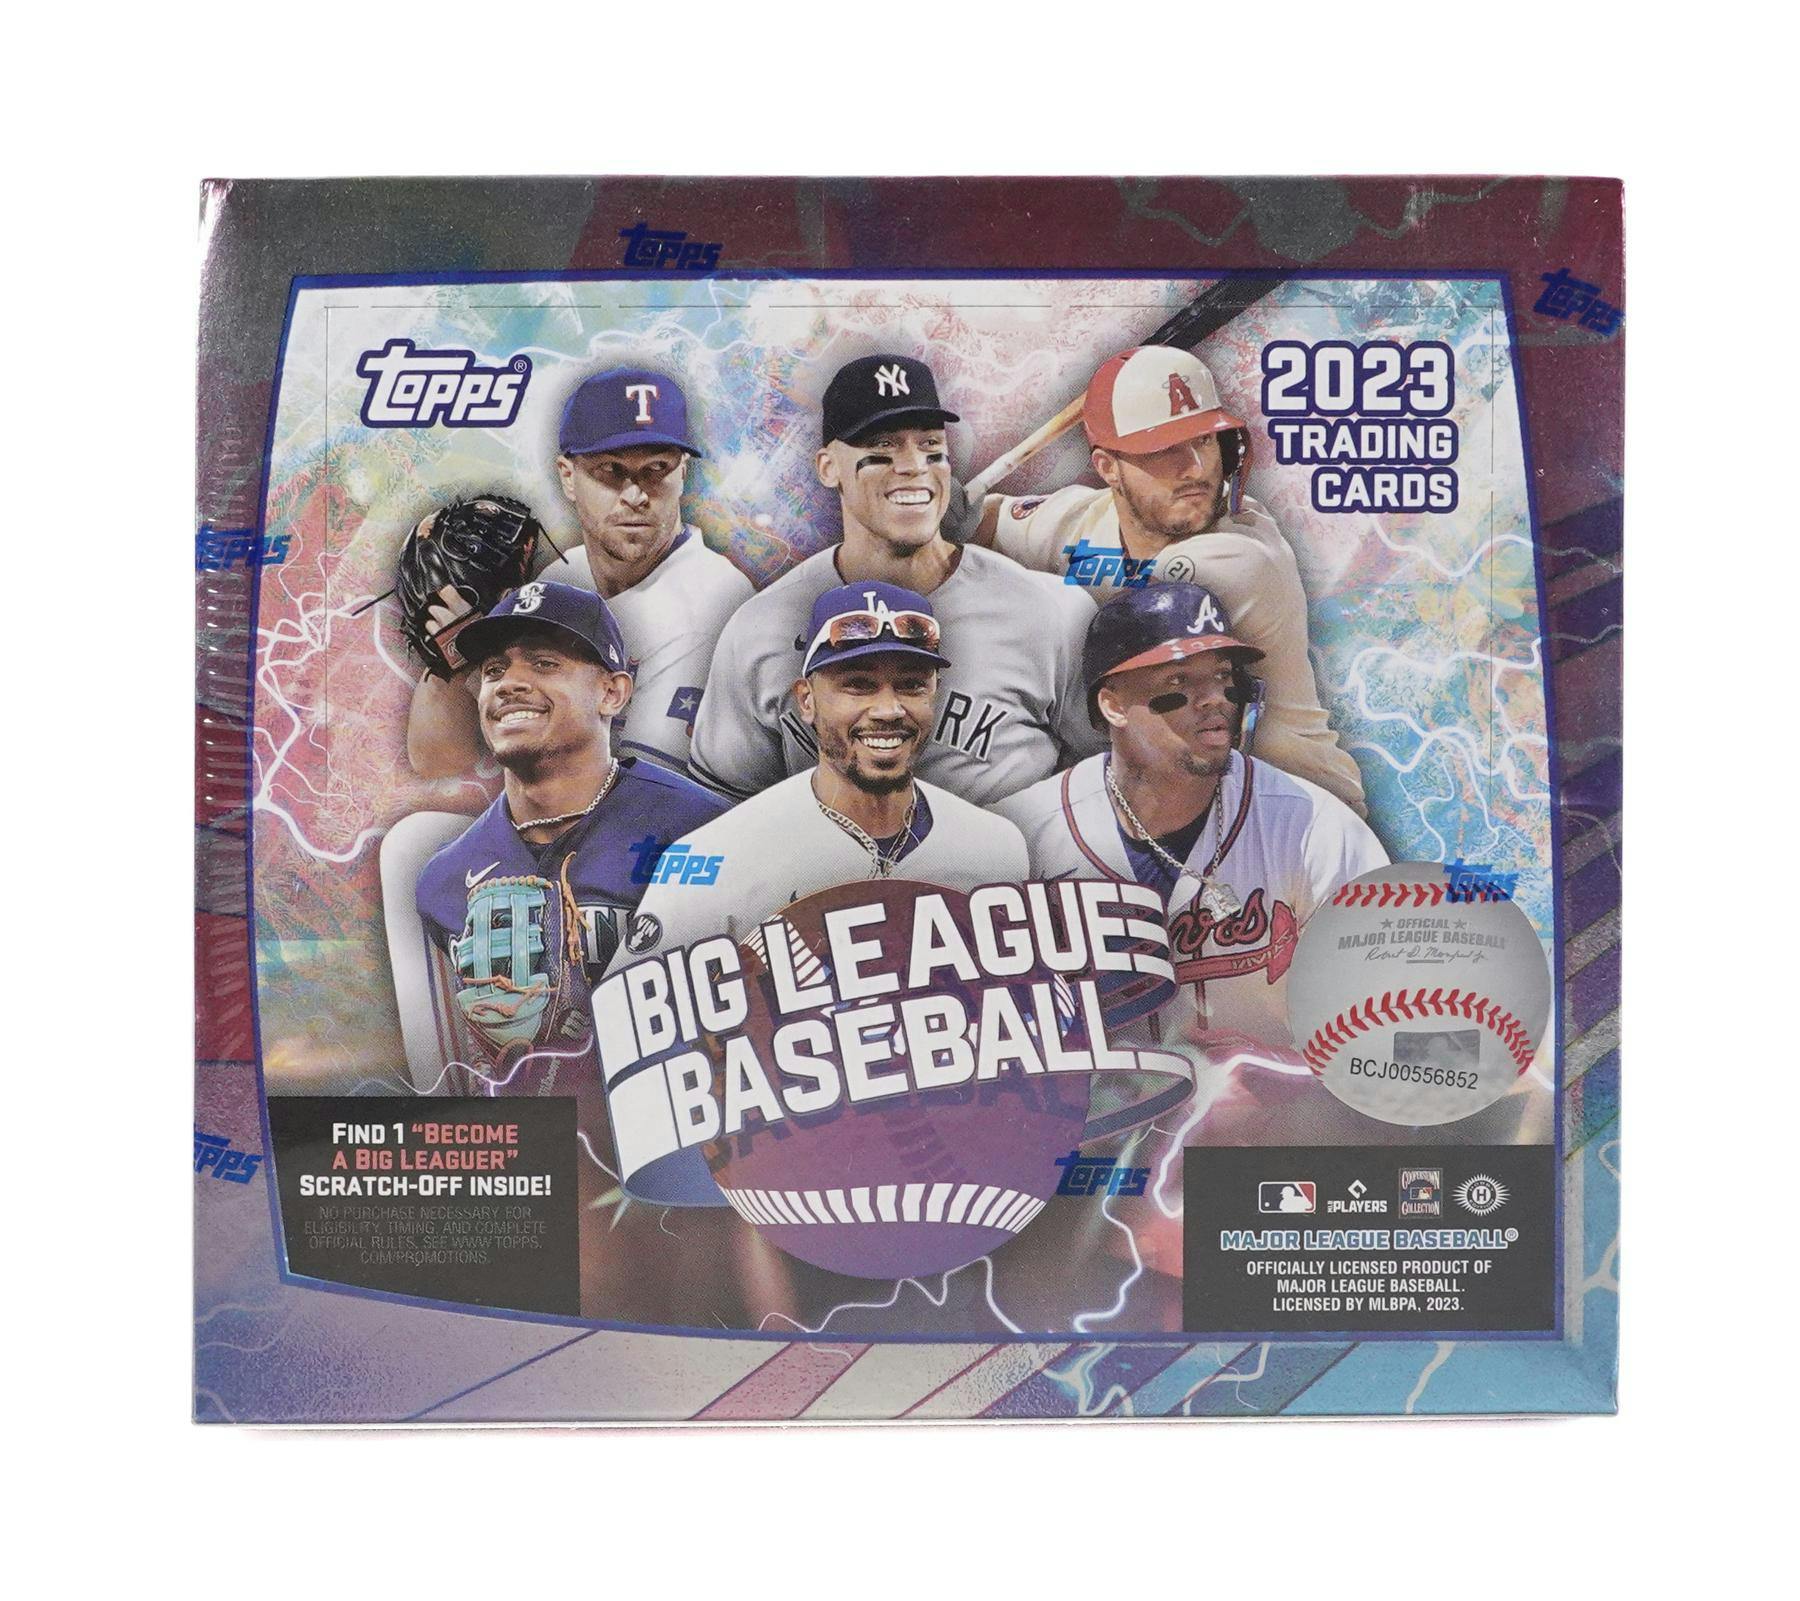 2021 Topps Big League Baseball Checklist, Team Set Lists, Box Info